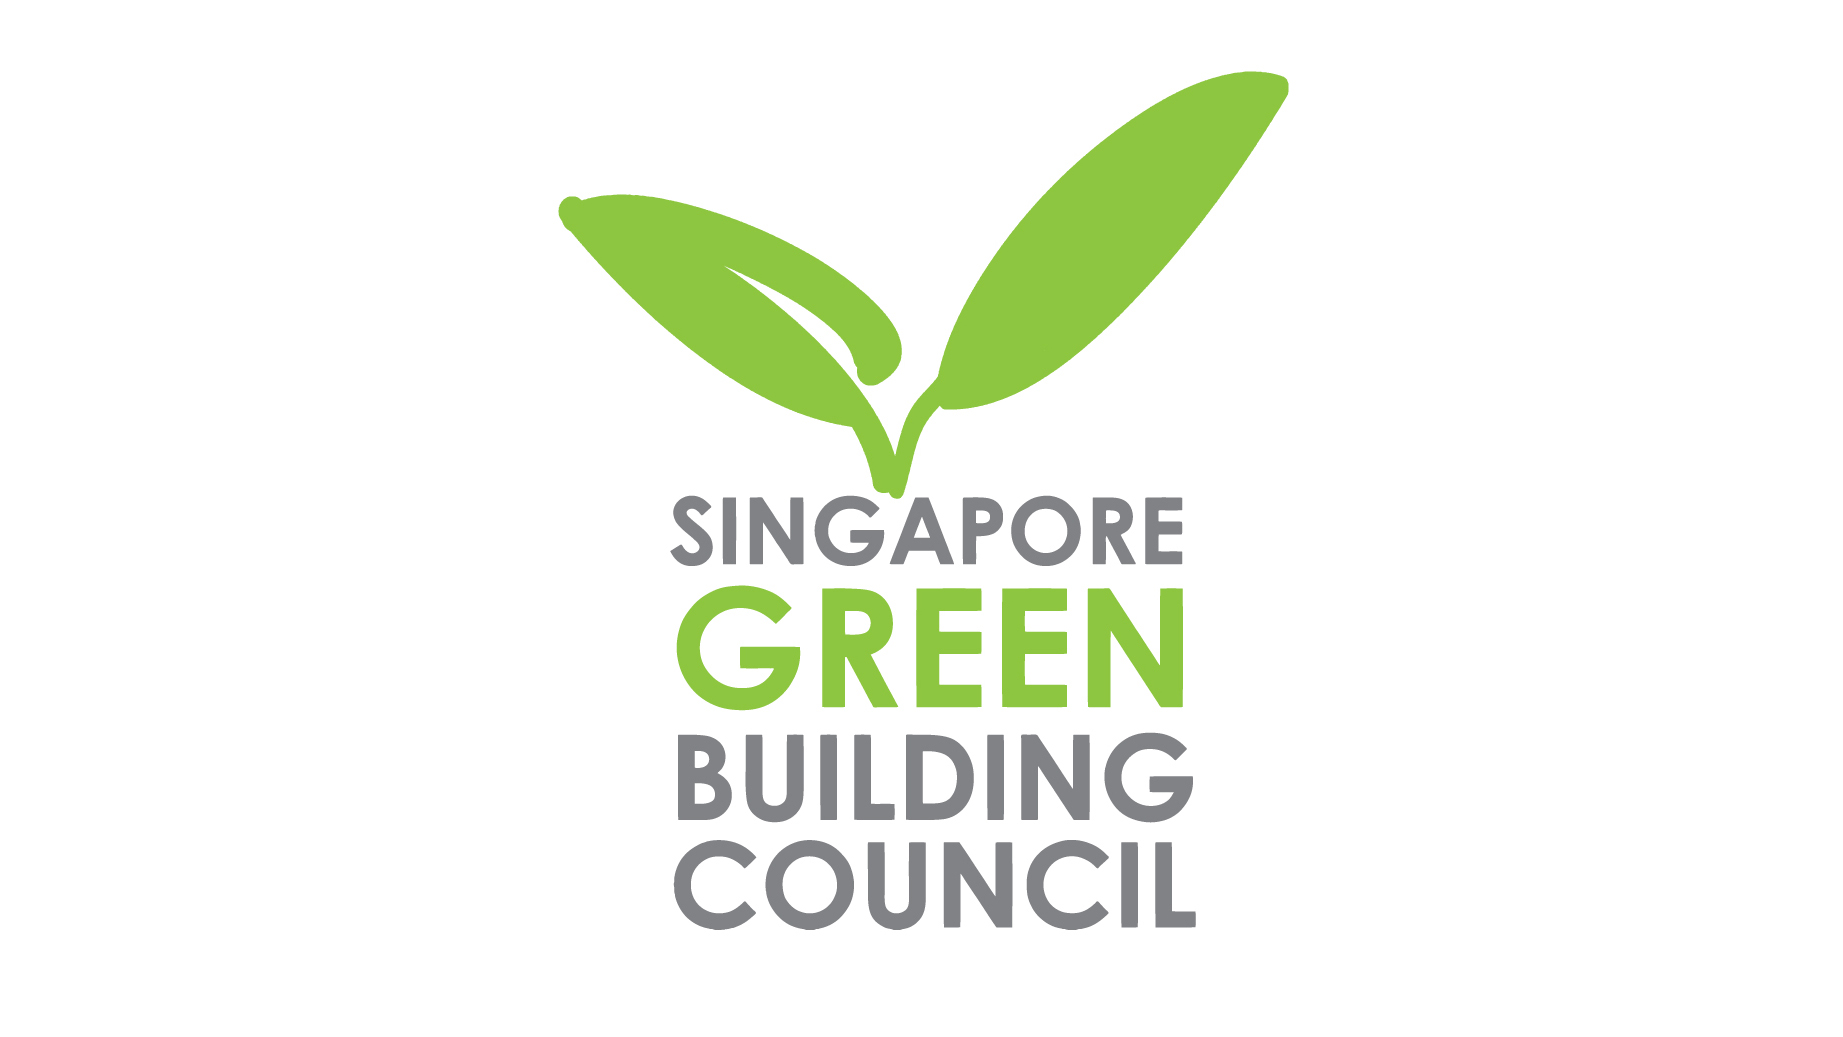 Singapore Green Building Council logo